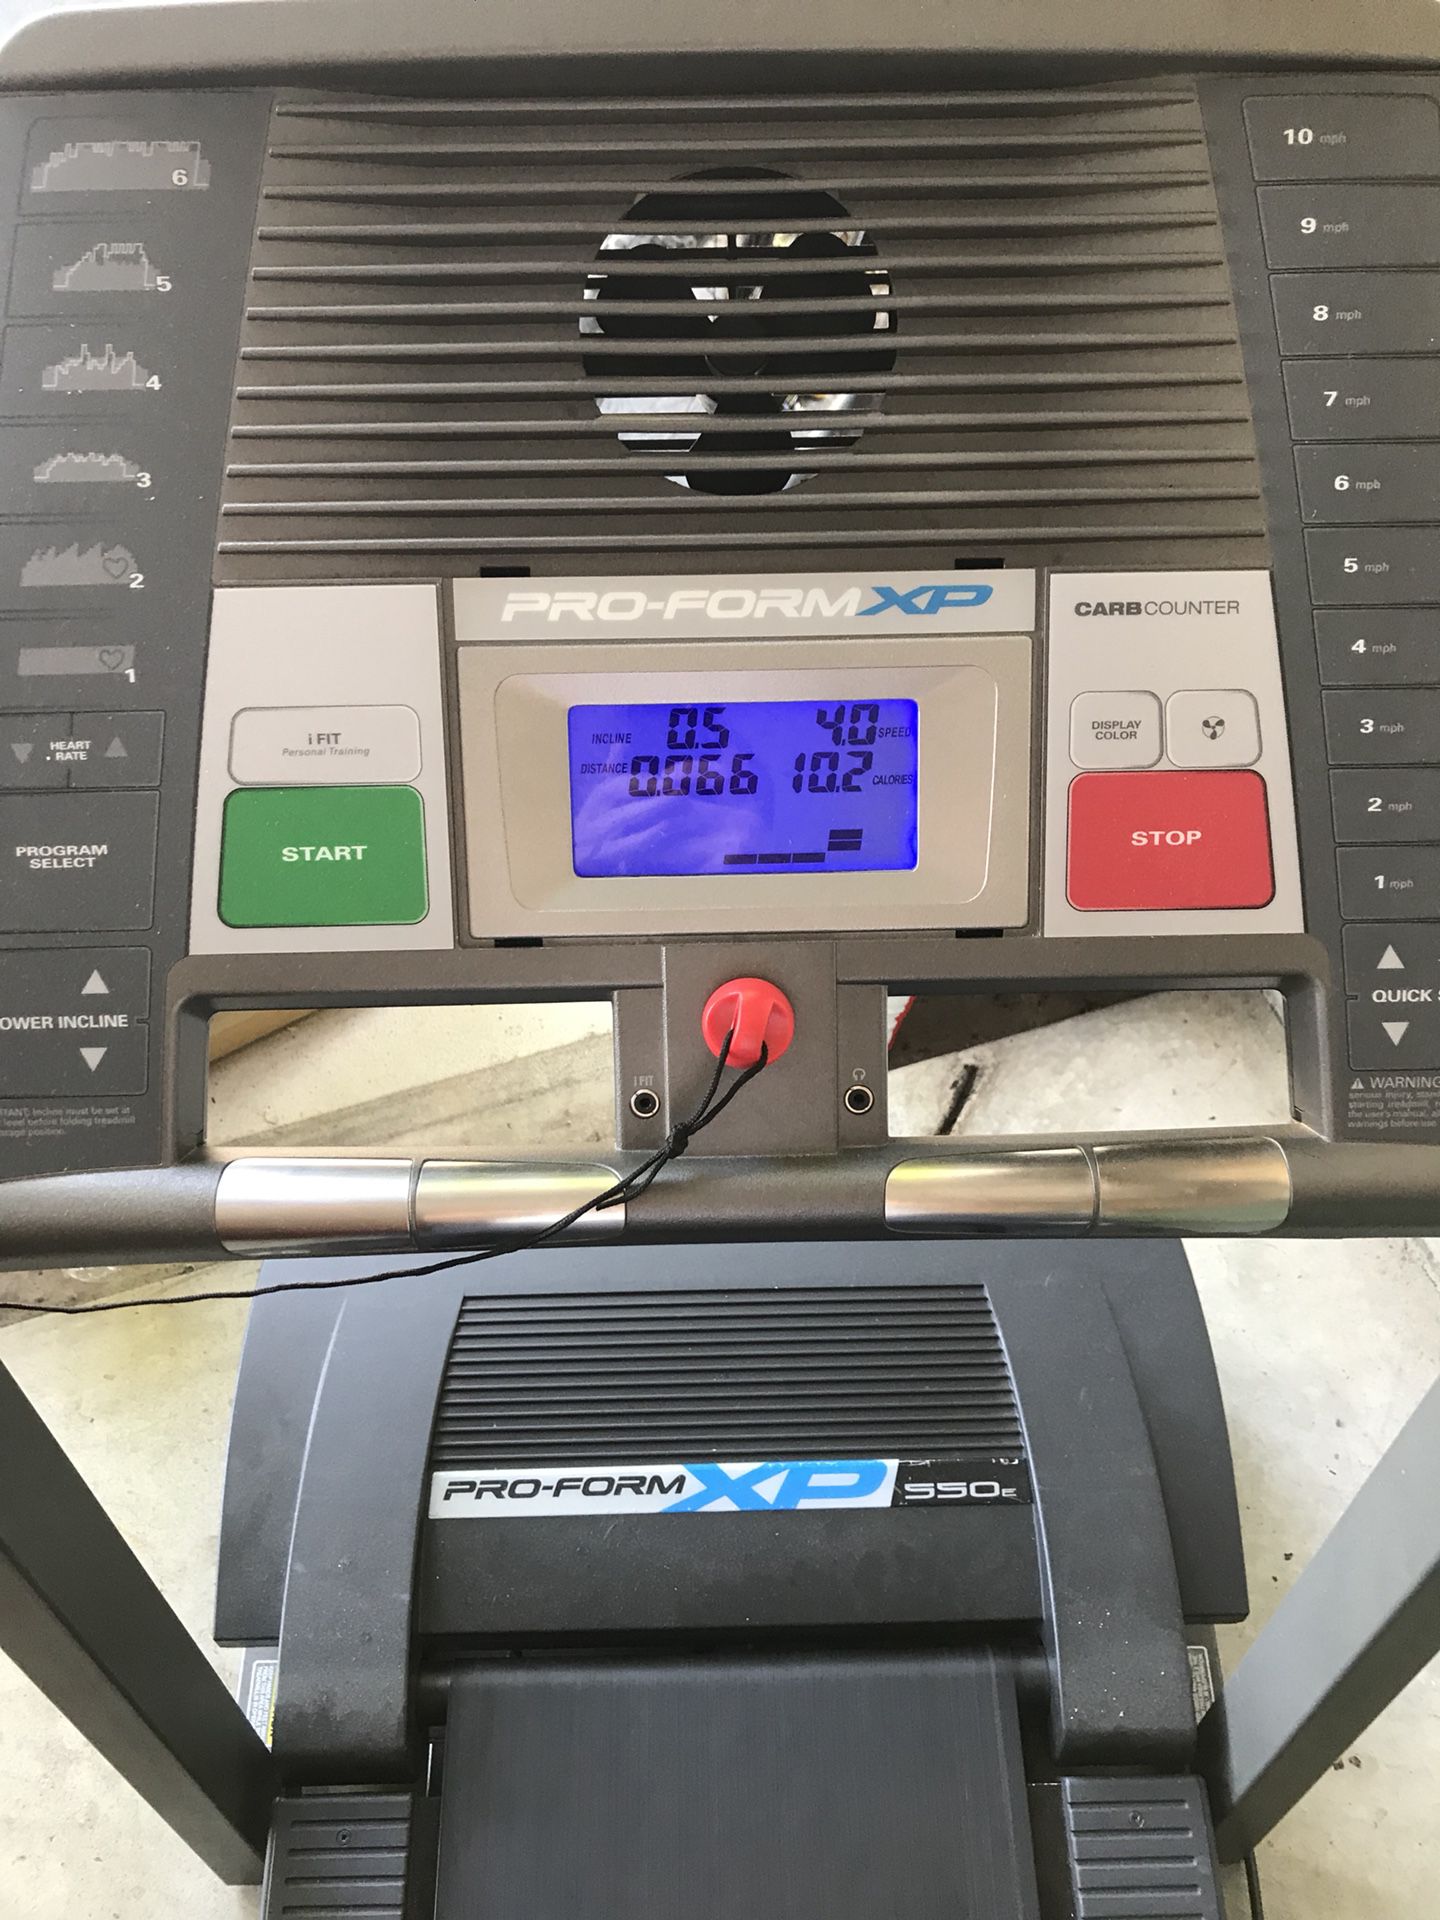 Pro-form XP Treadmill